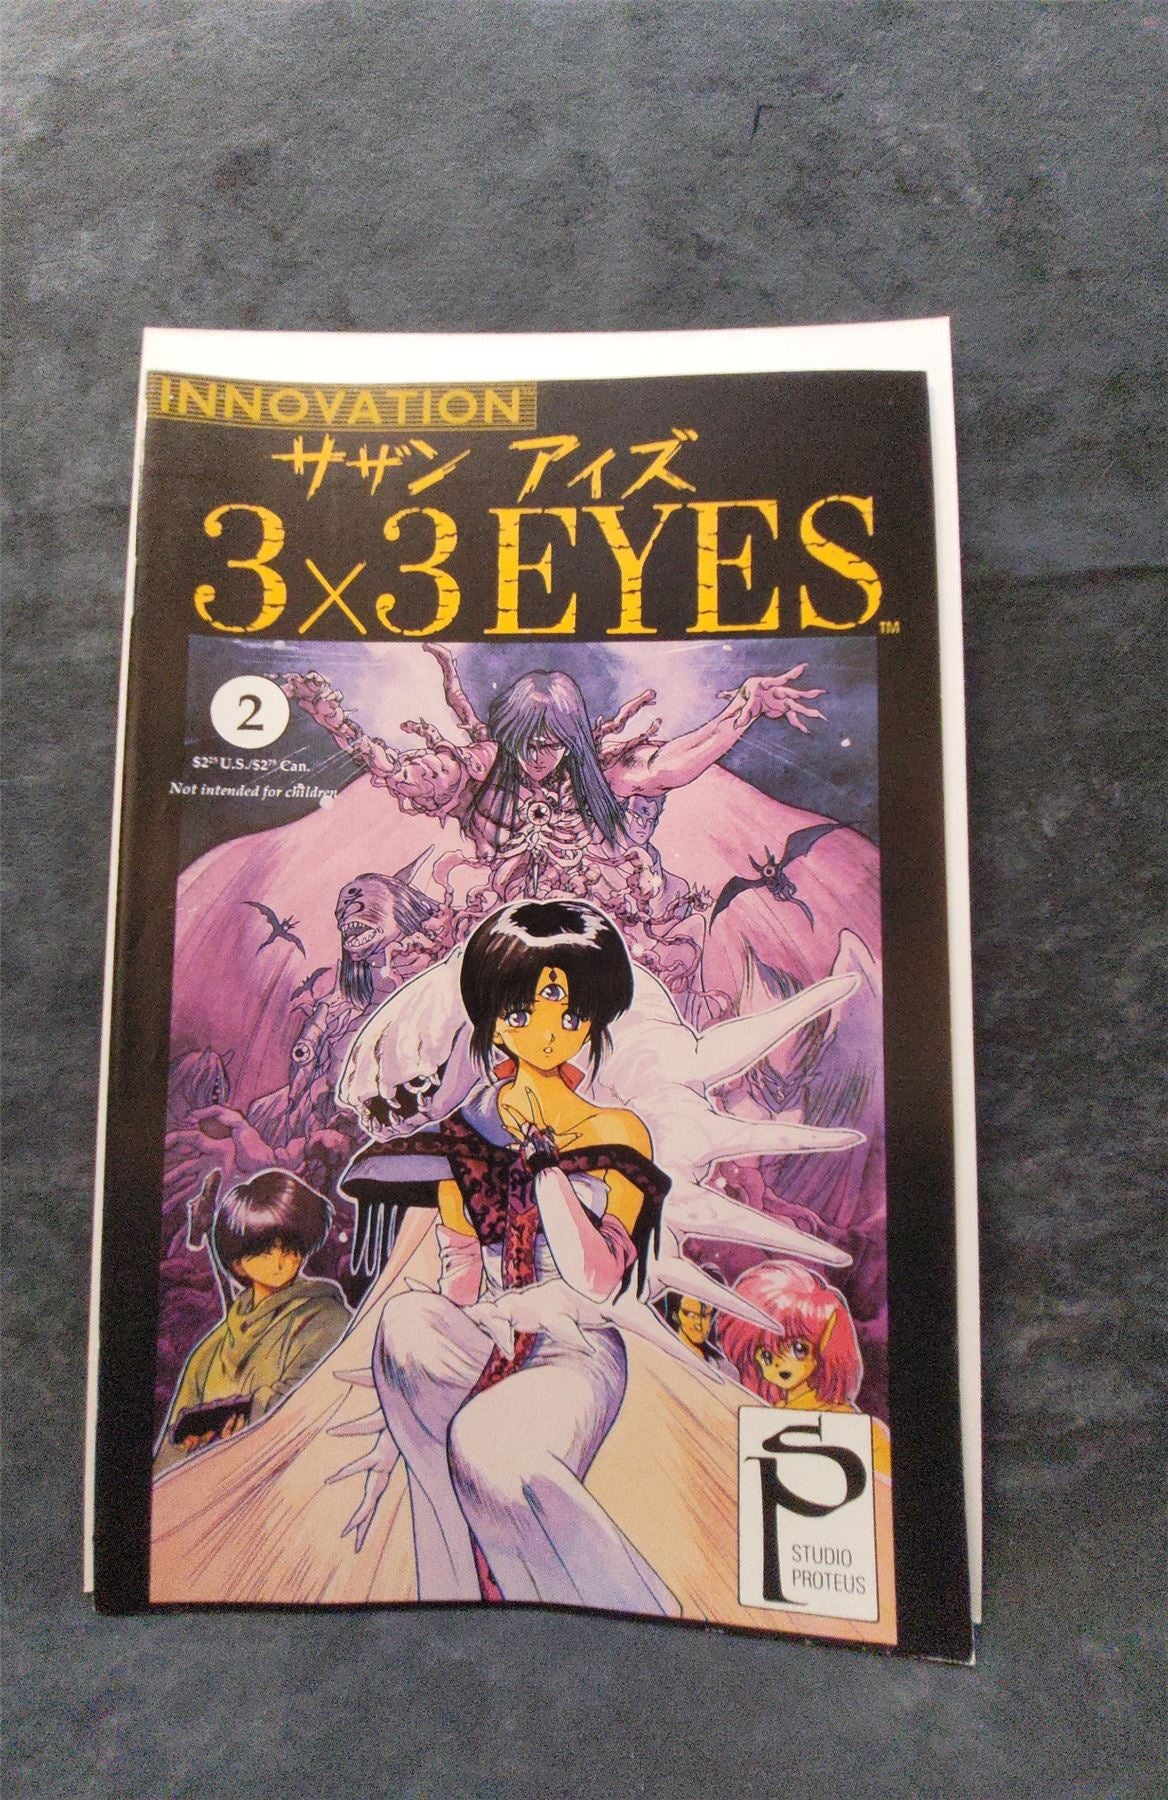 3x3 Eyes #2 1991 innovation Comic Book